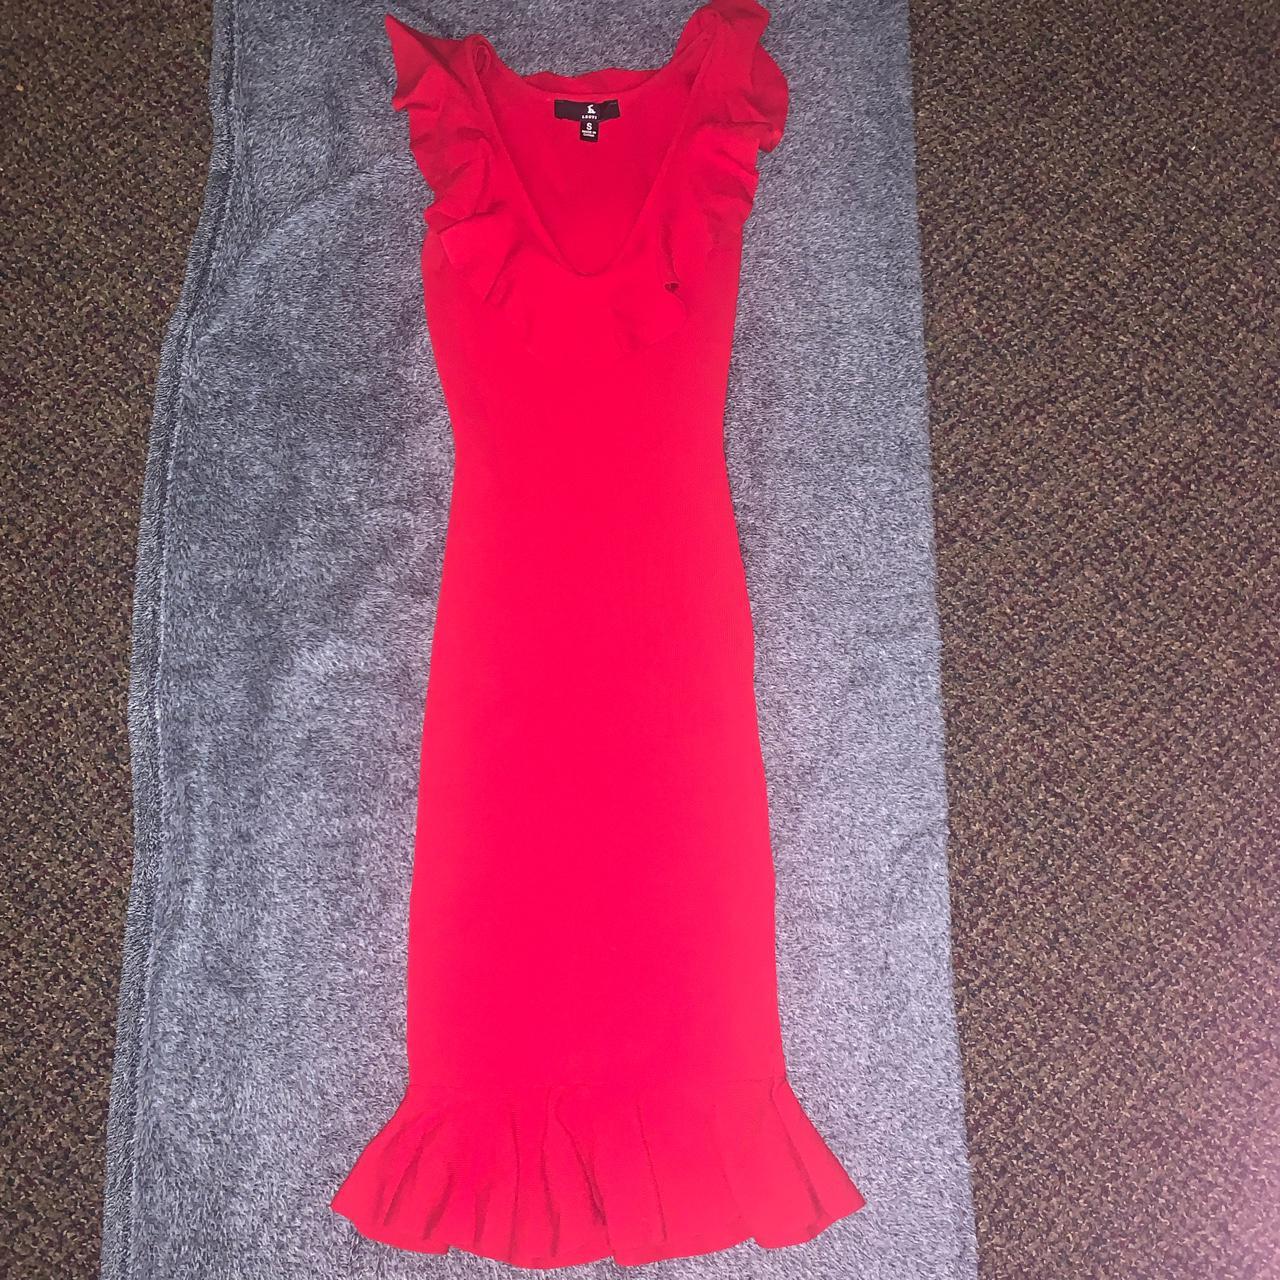 Product Image 1 - 2 Red dress

Bundle dress deal
Taylor